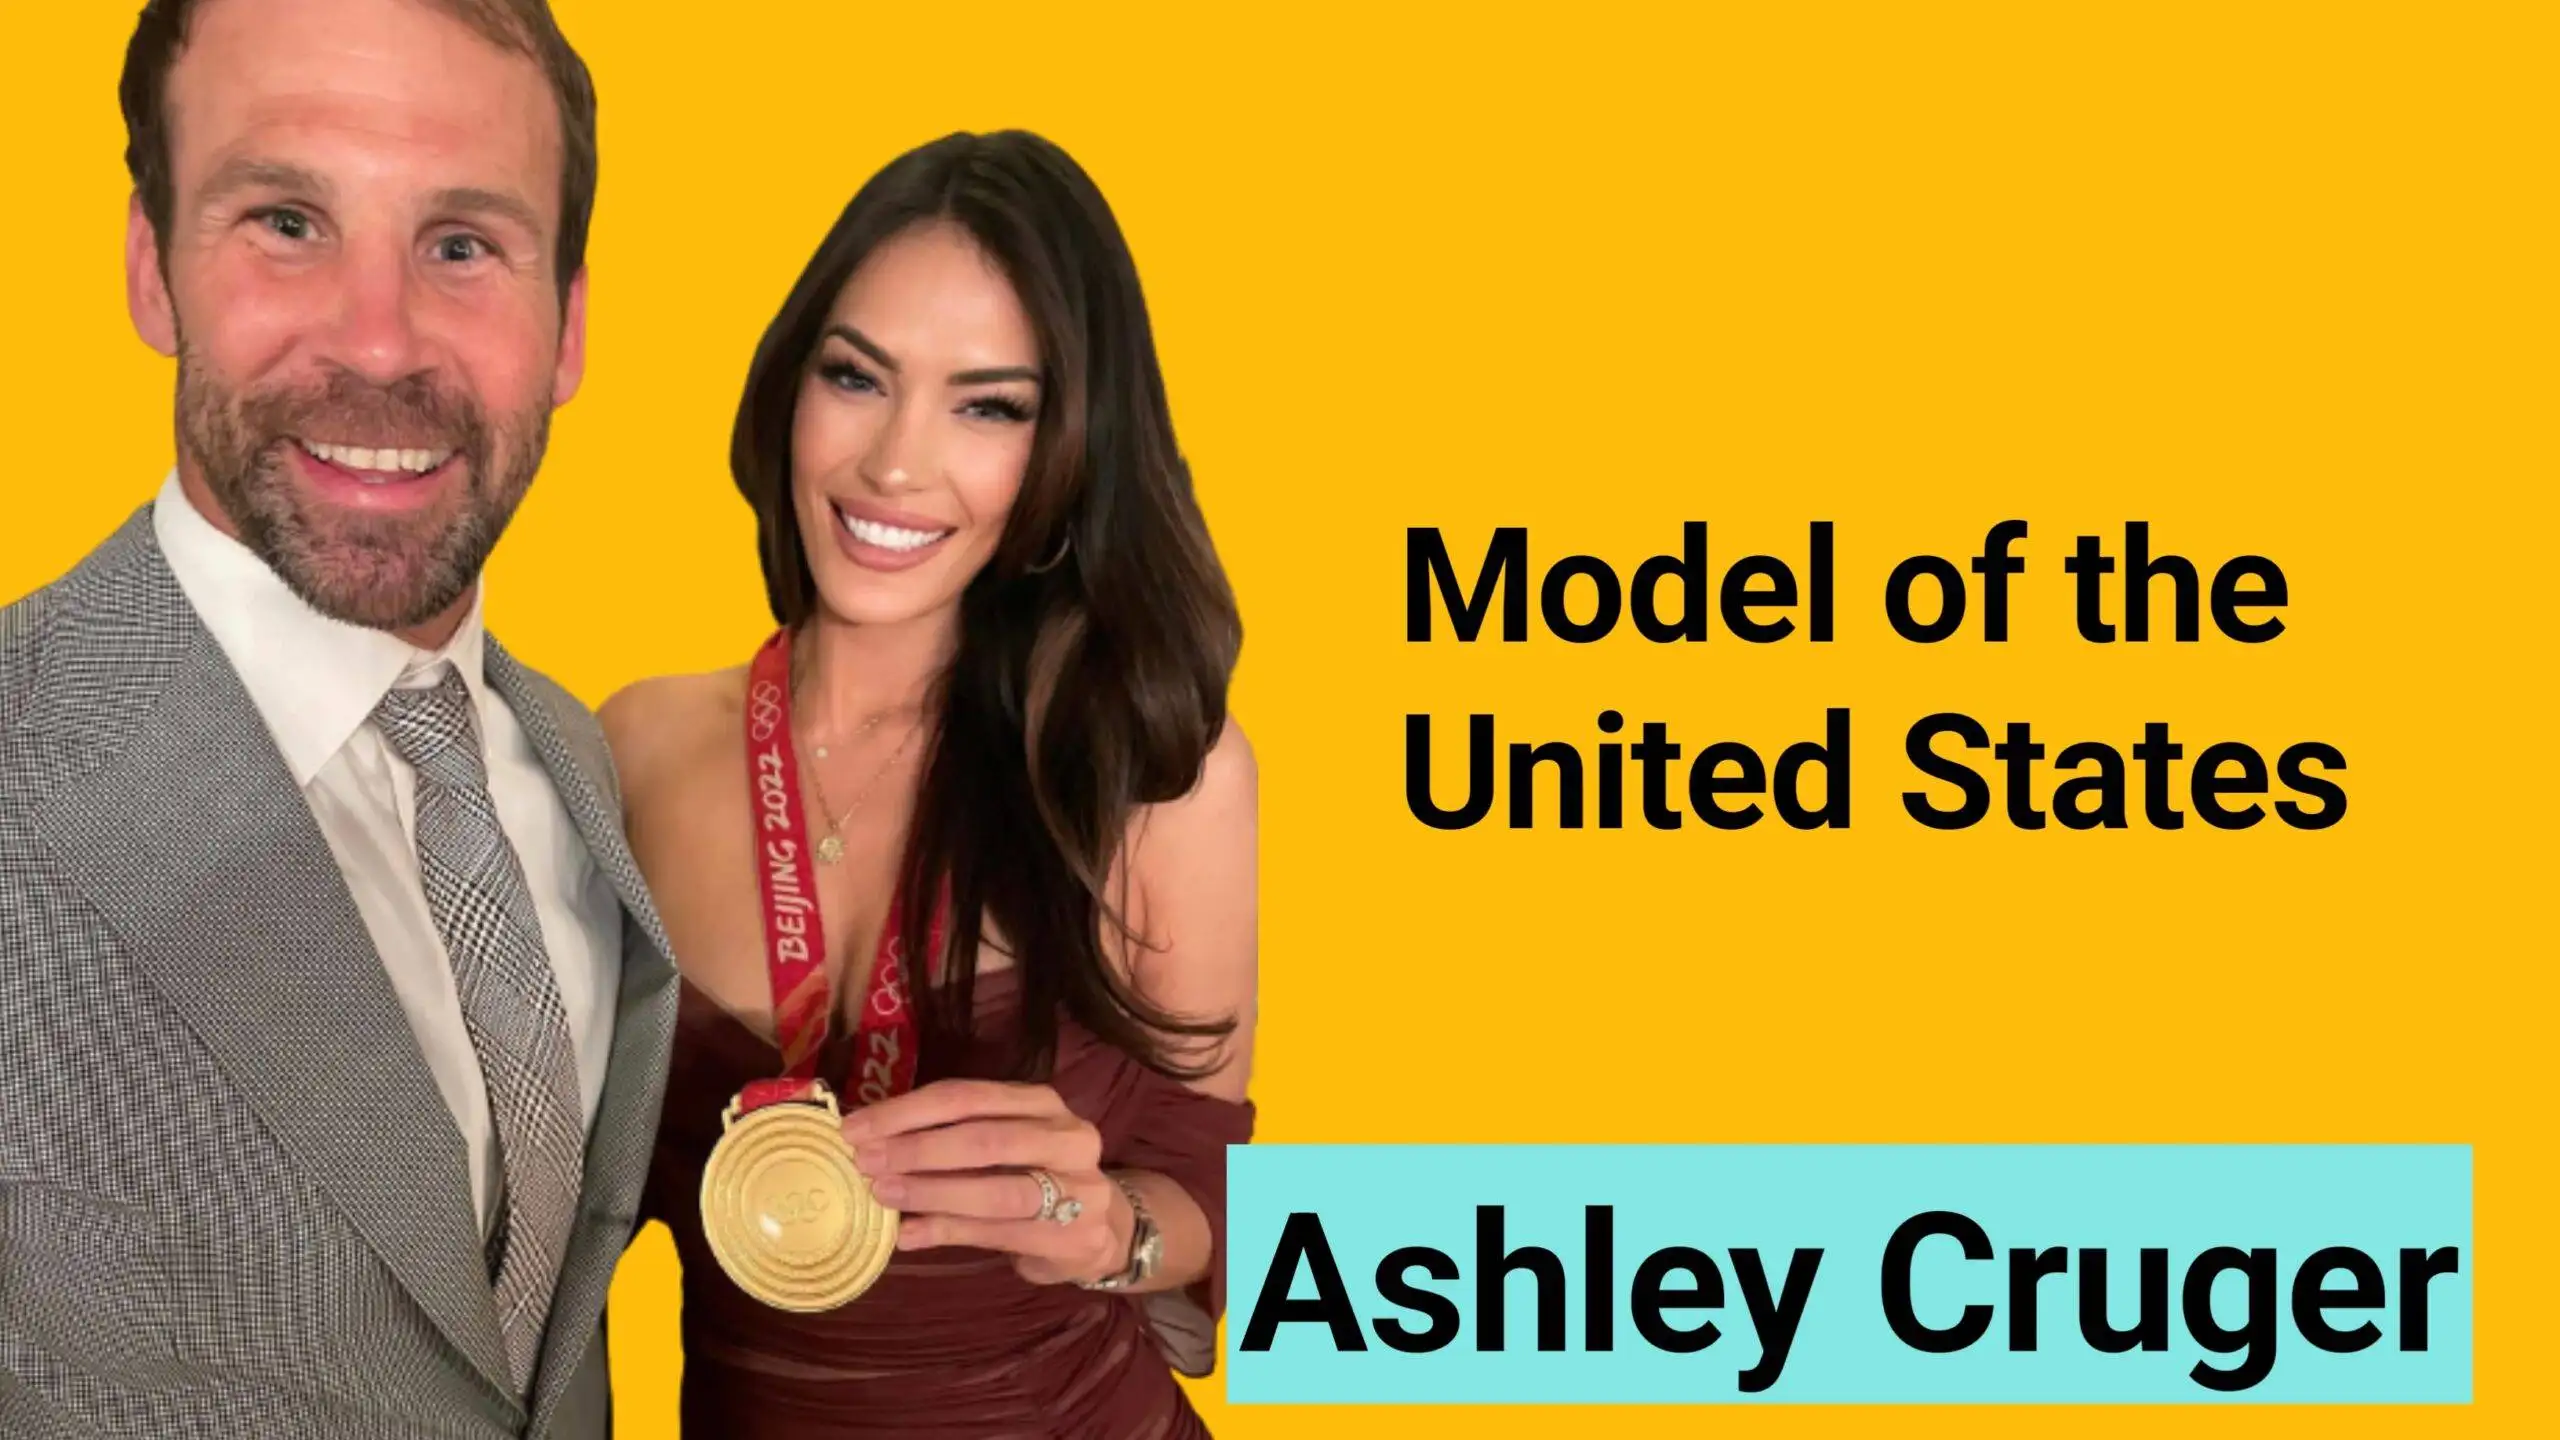 Ashley Cruger Bio, Age, Career, Net Worth